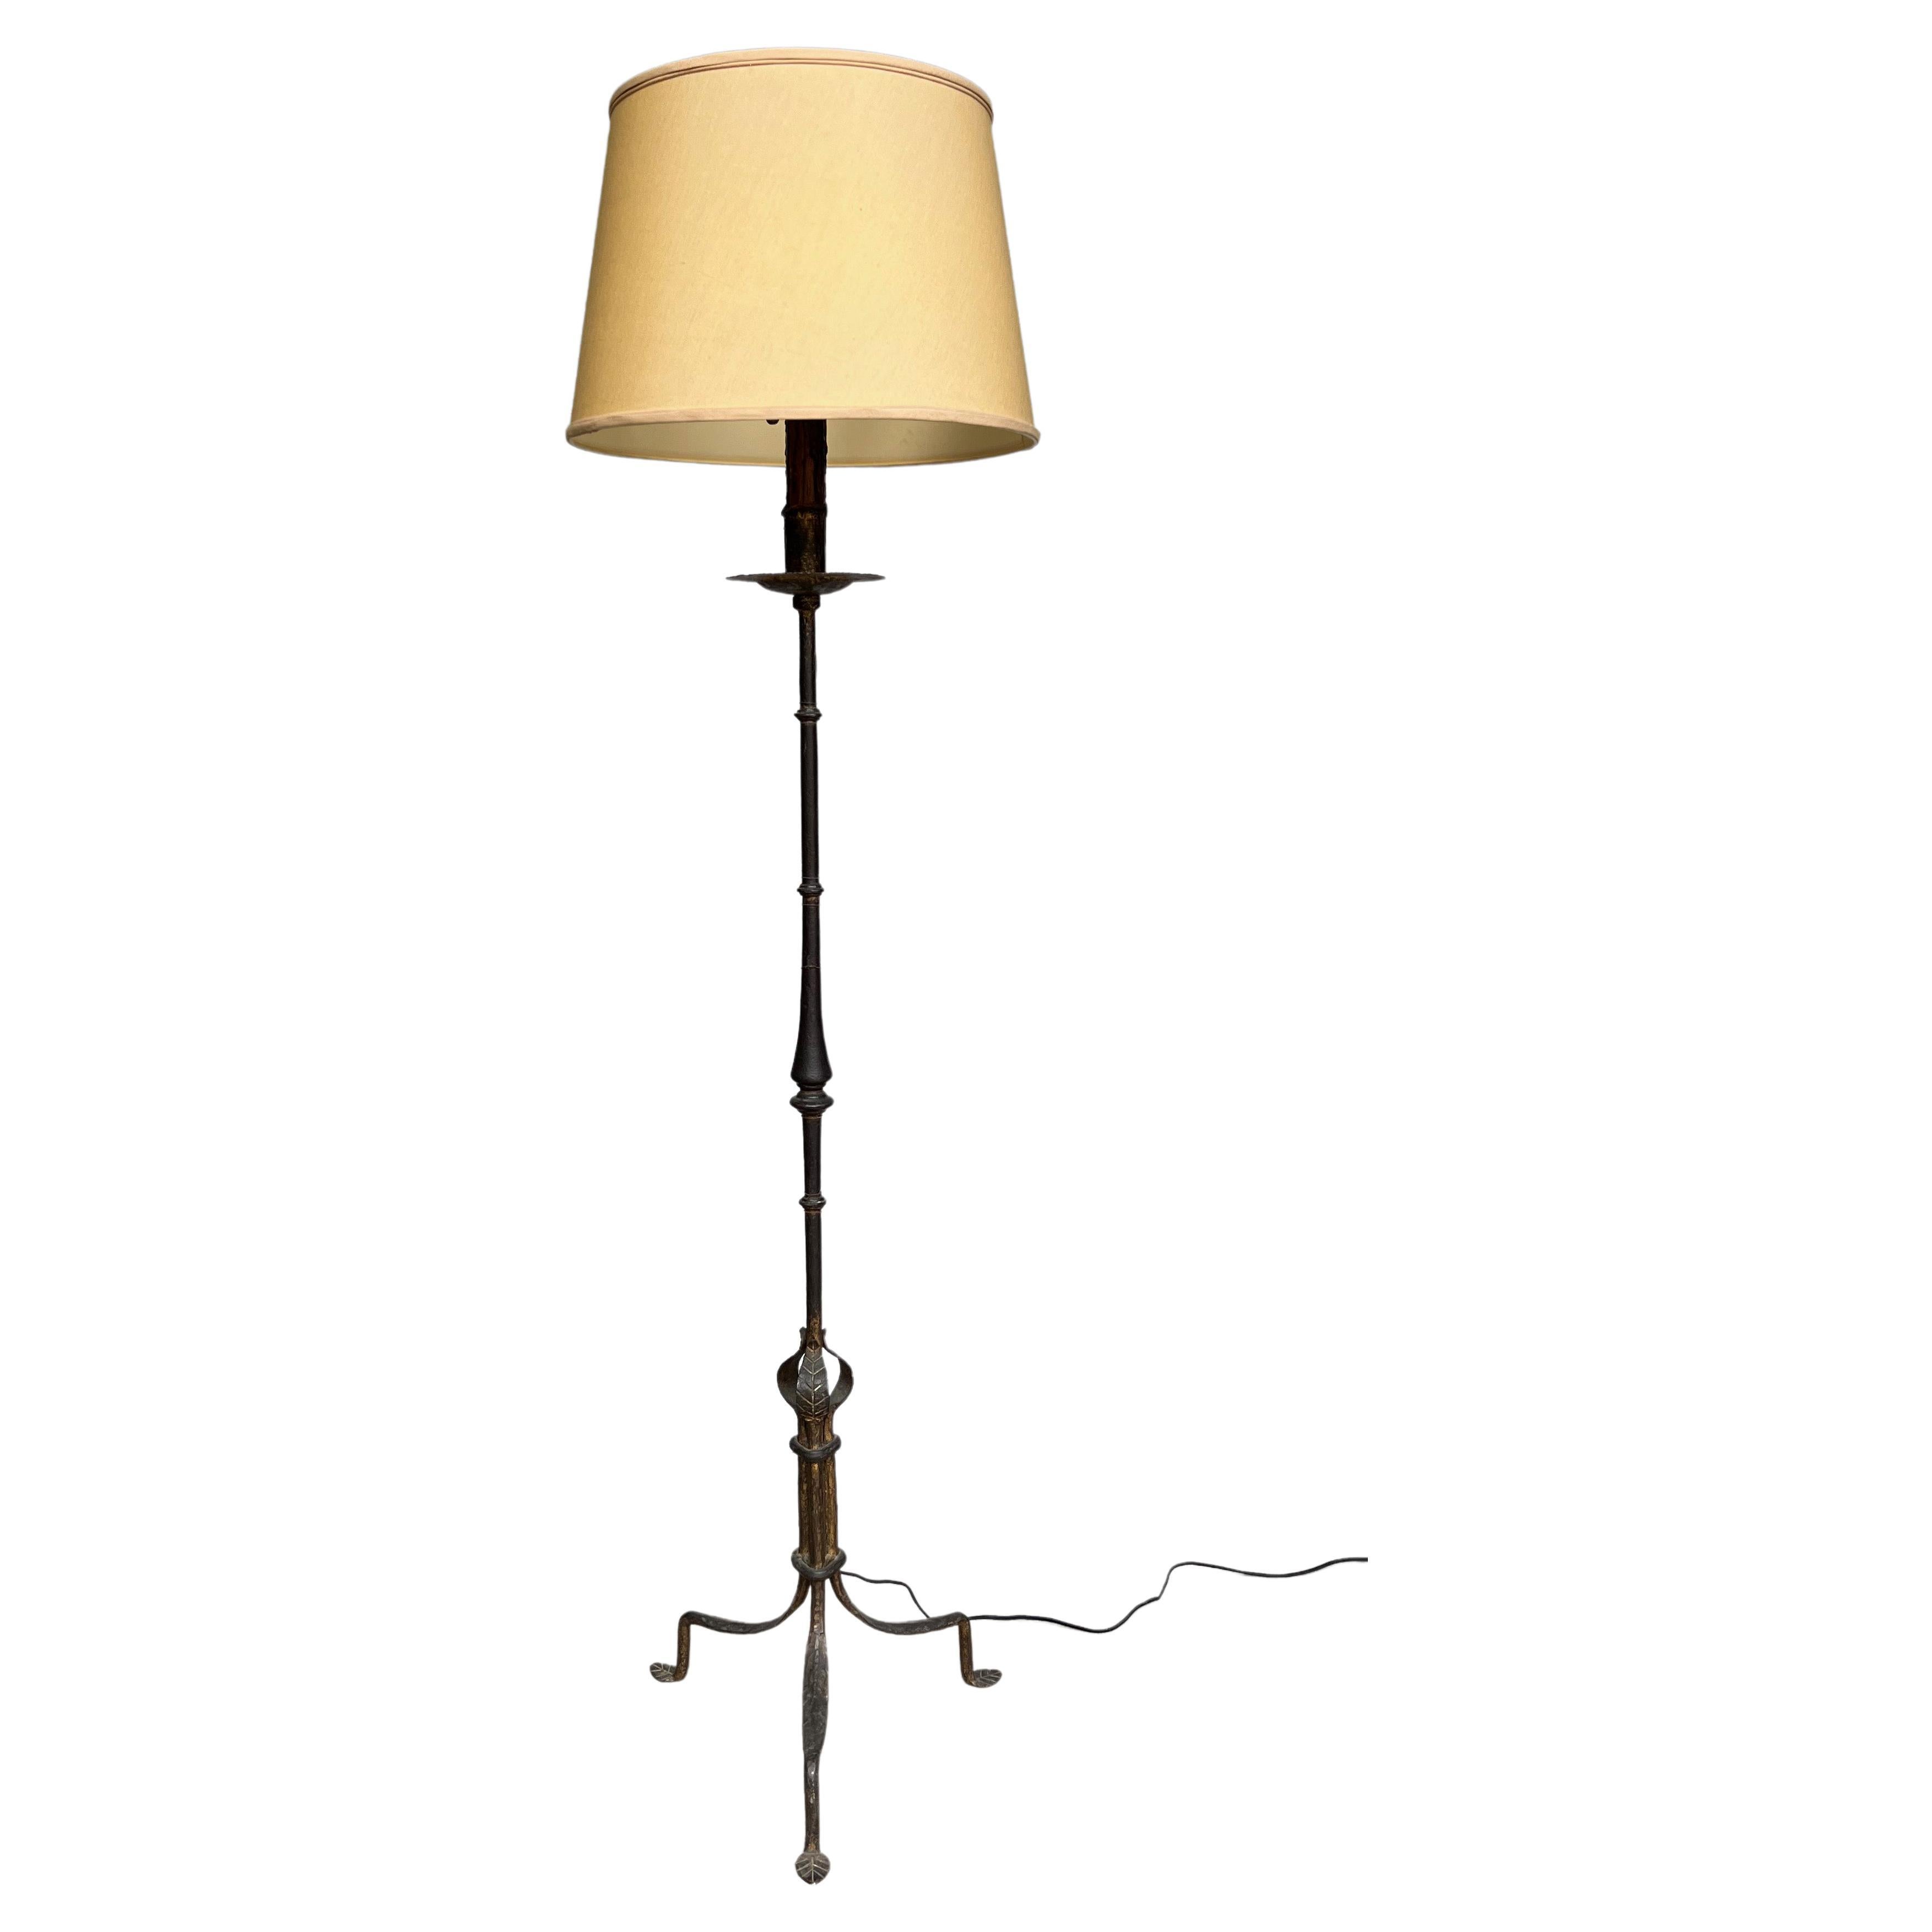  Spanish Dark Patinated Wrought Iron Floor Lamp  For Sale